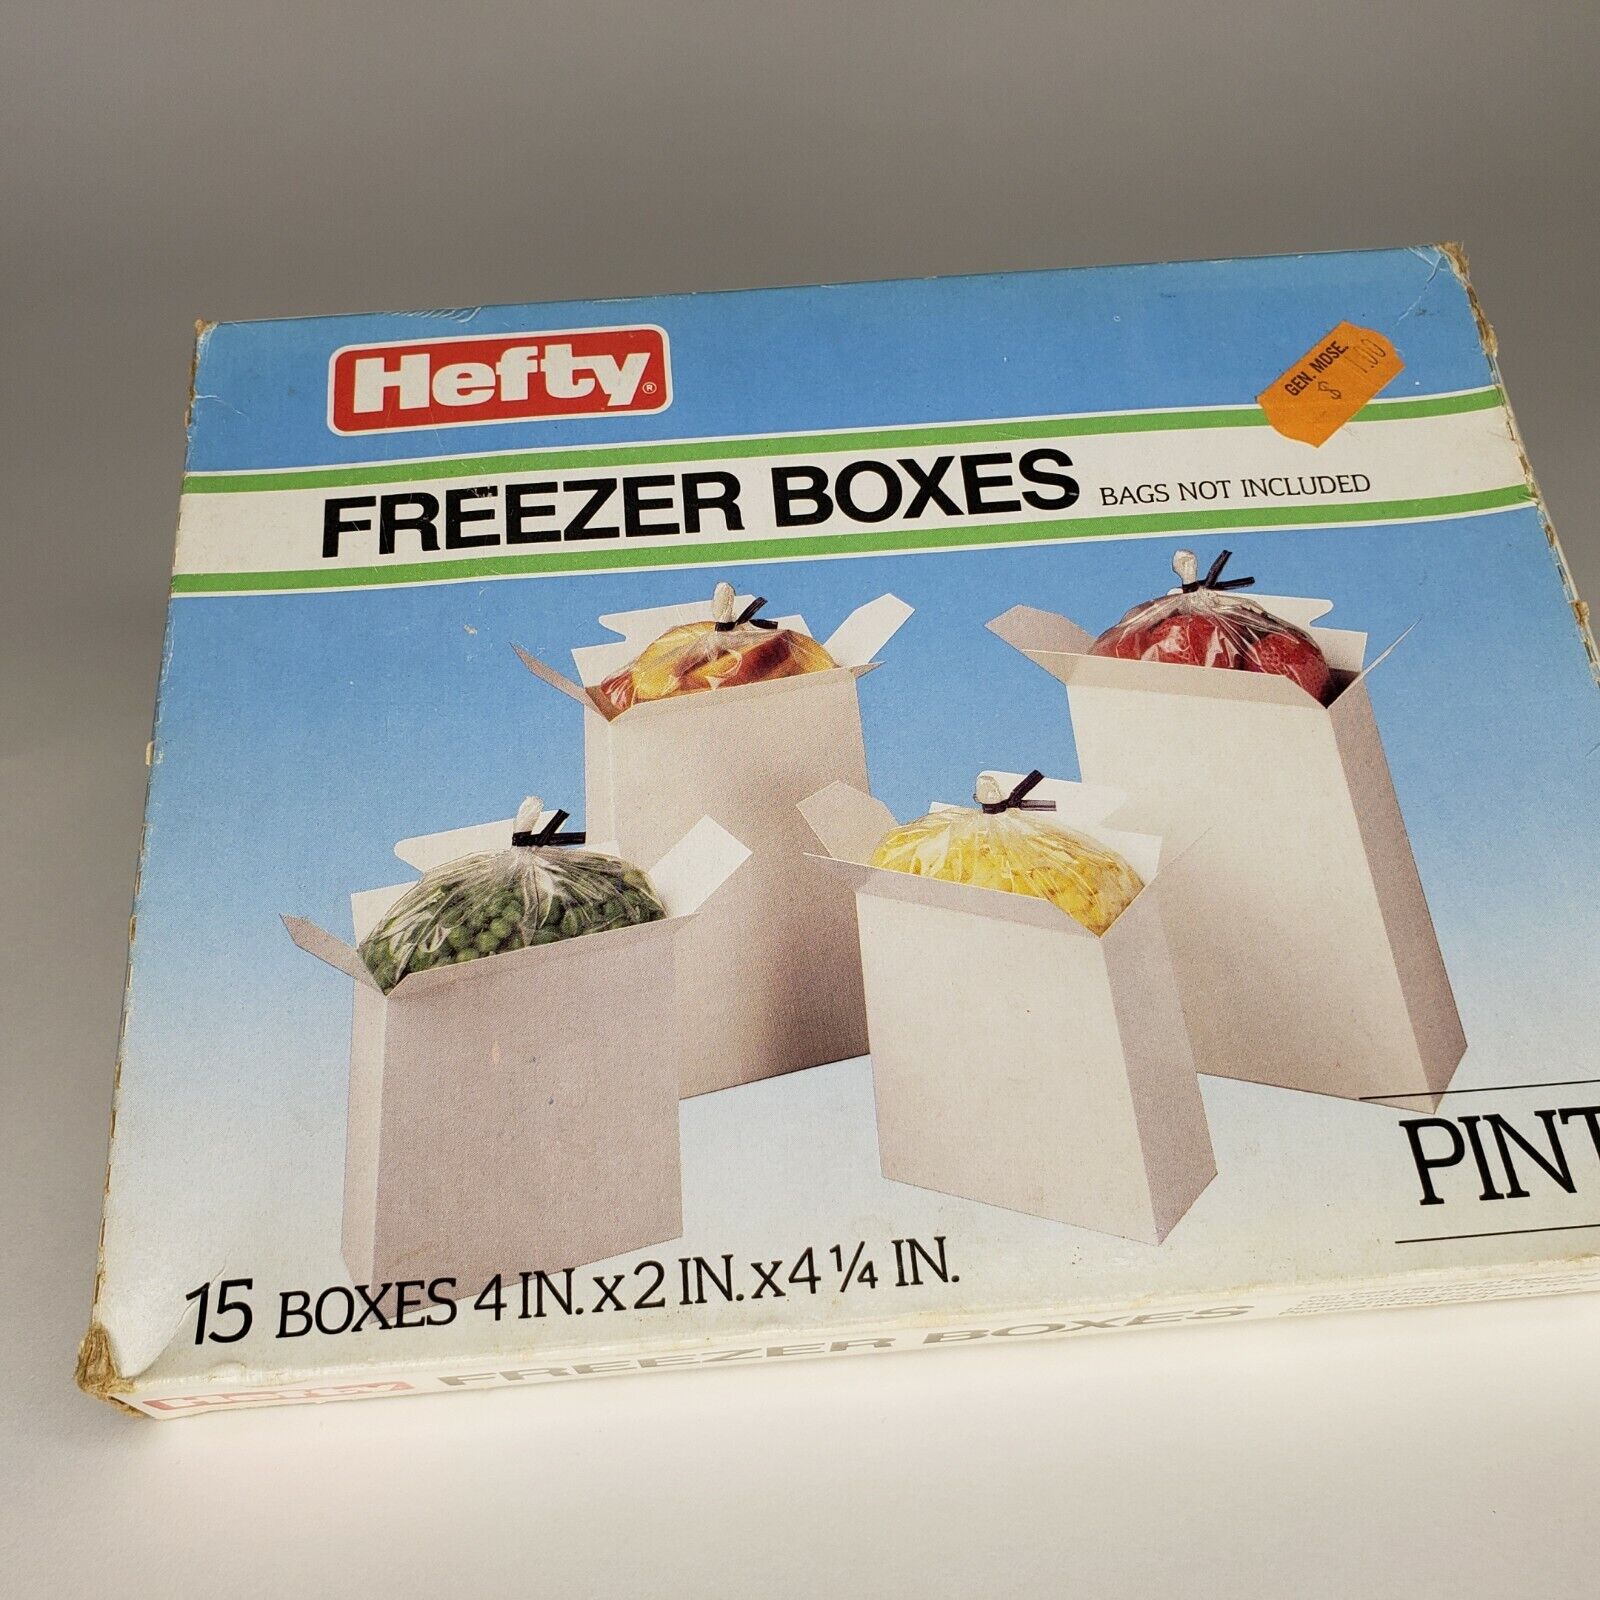 New Vintage 1988 Hefty Freezer Boxes NIB Pint Size 15 Boxes